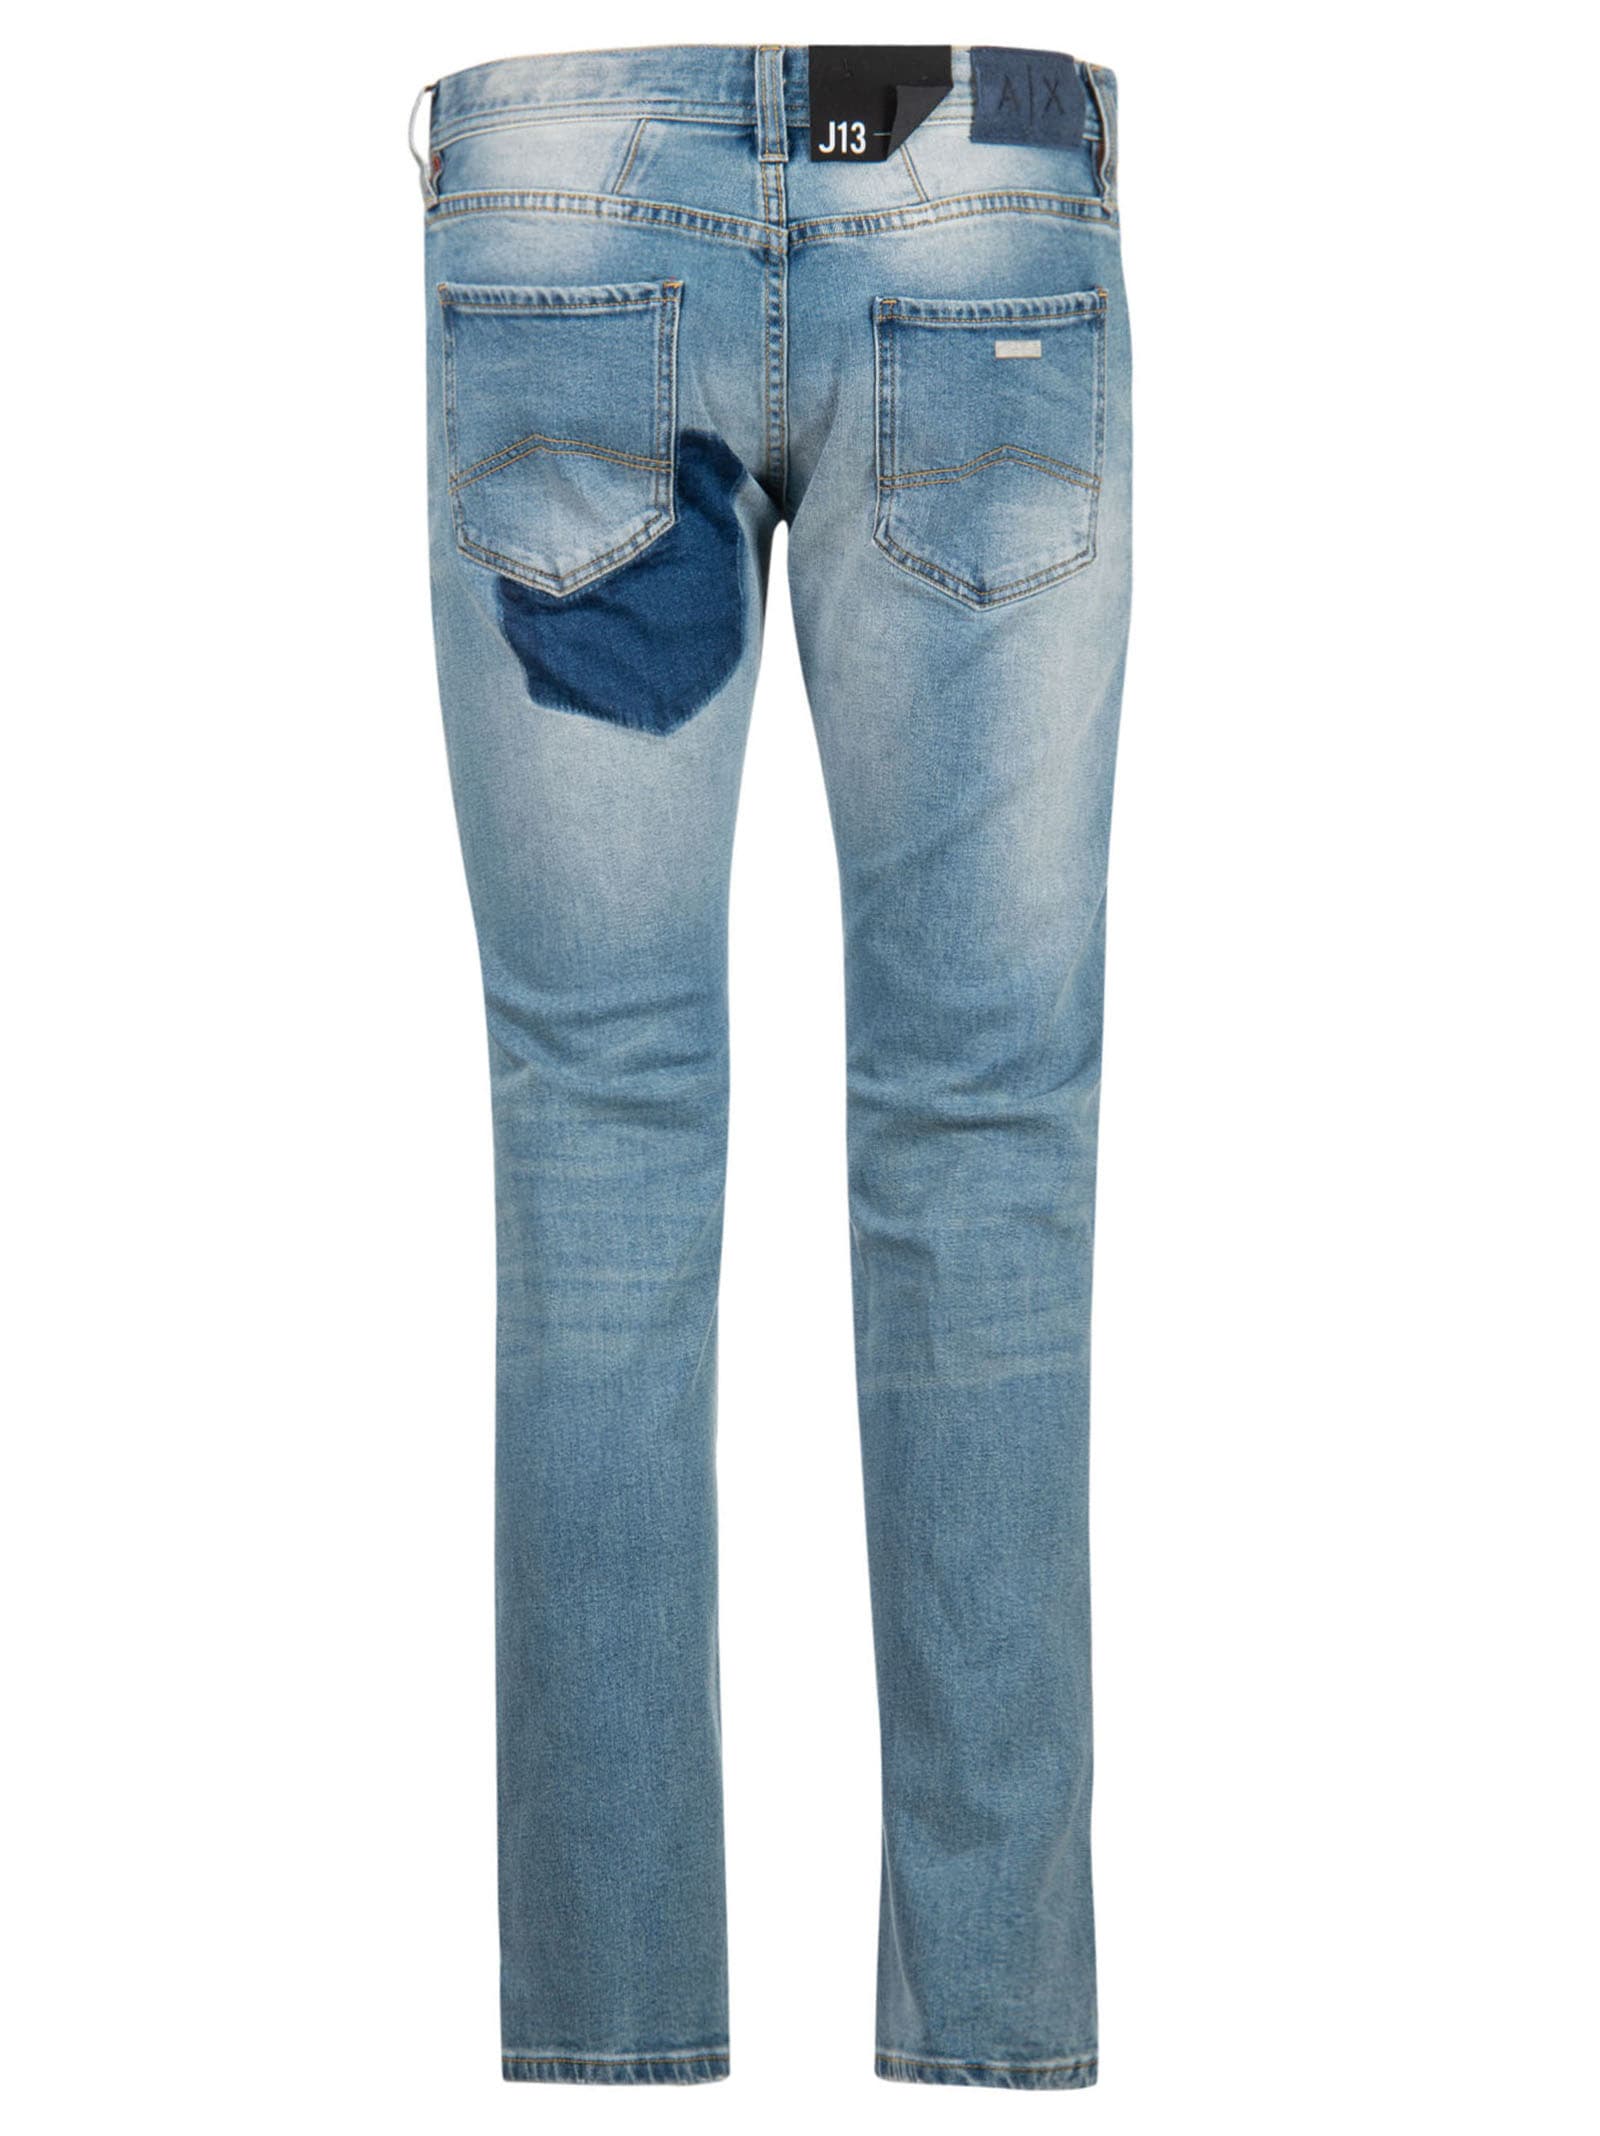 armani brand jeans